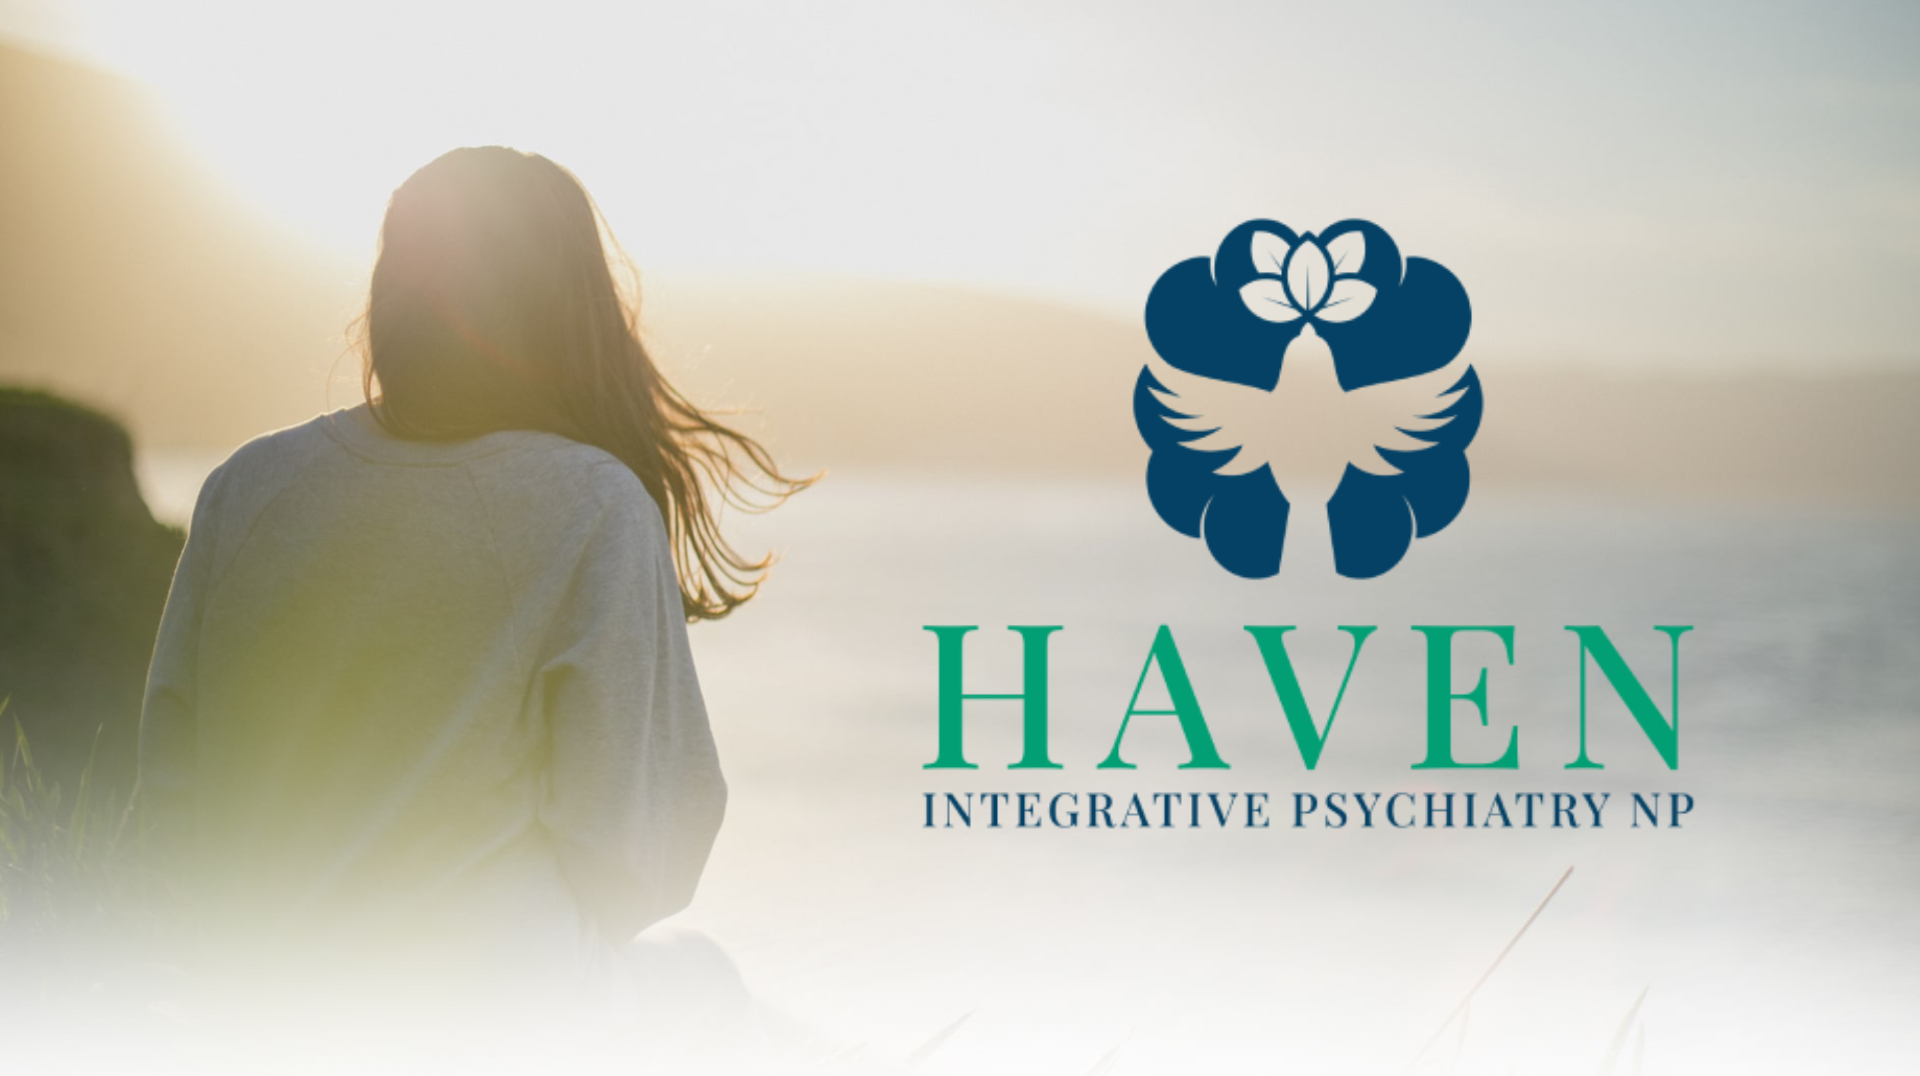 Haven Integrative Psychiatry NP